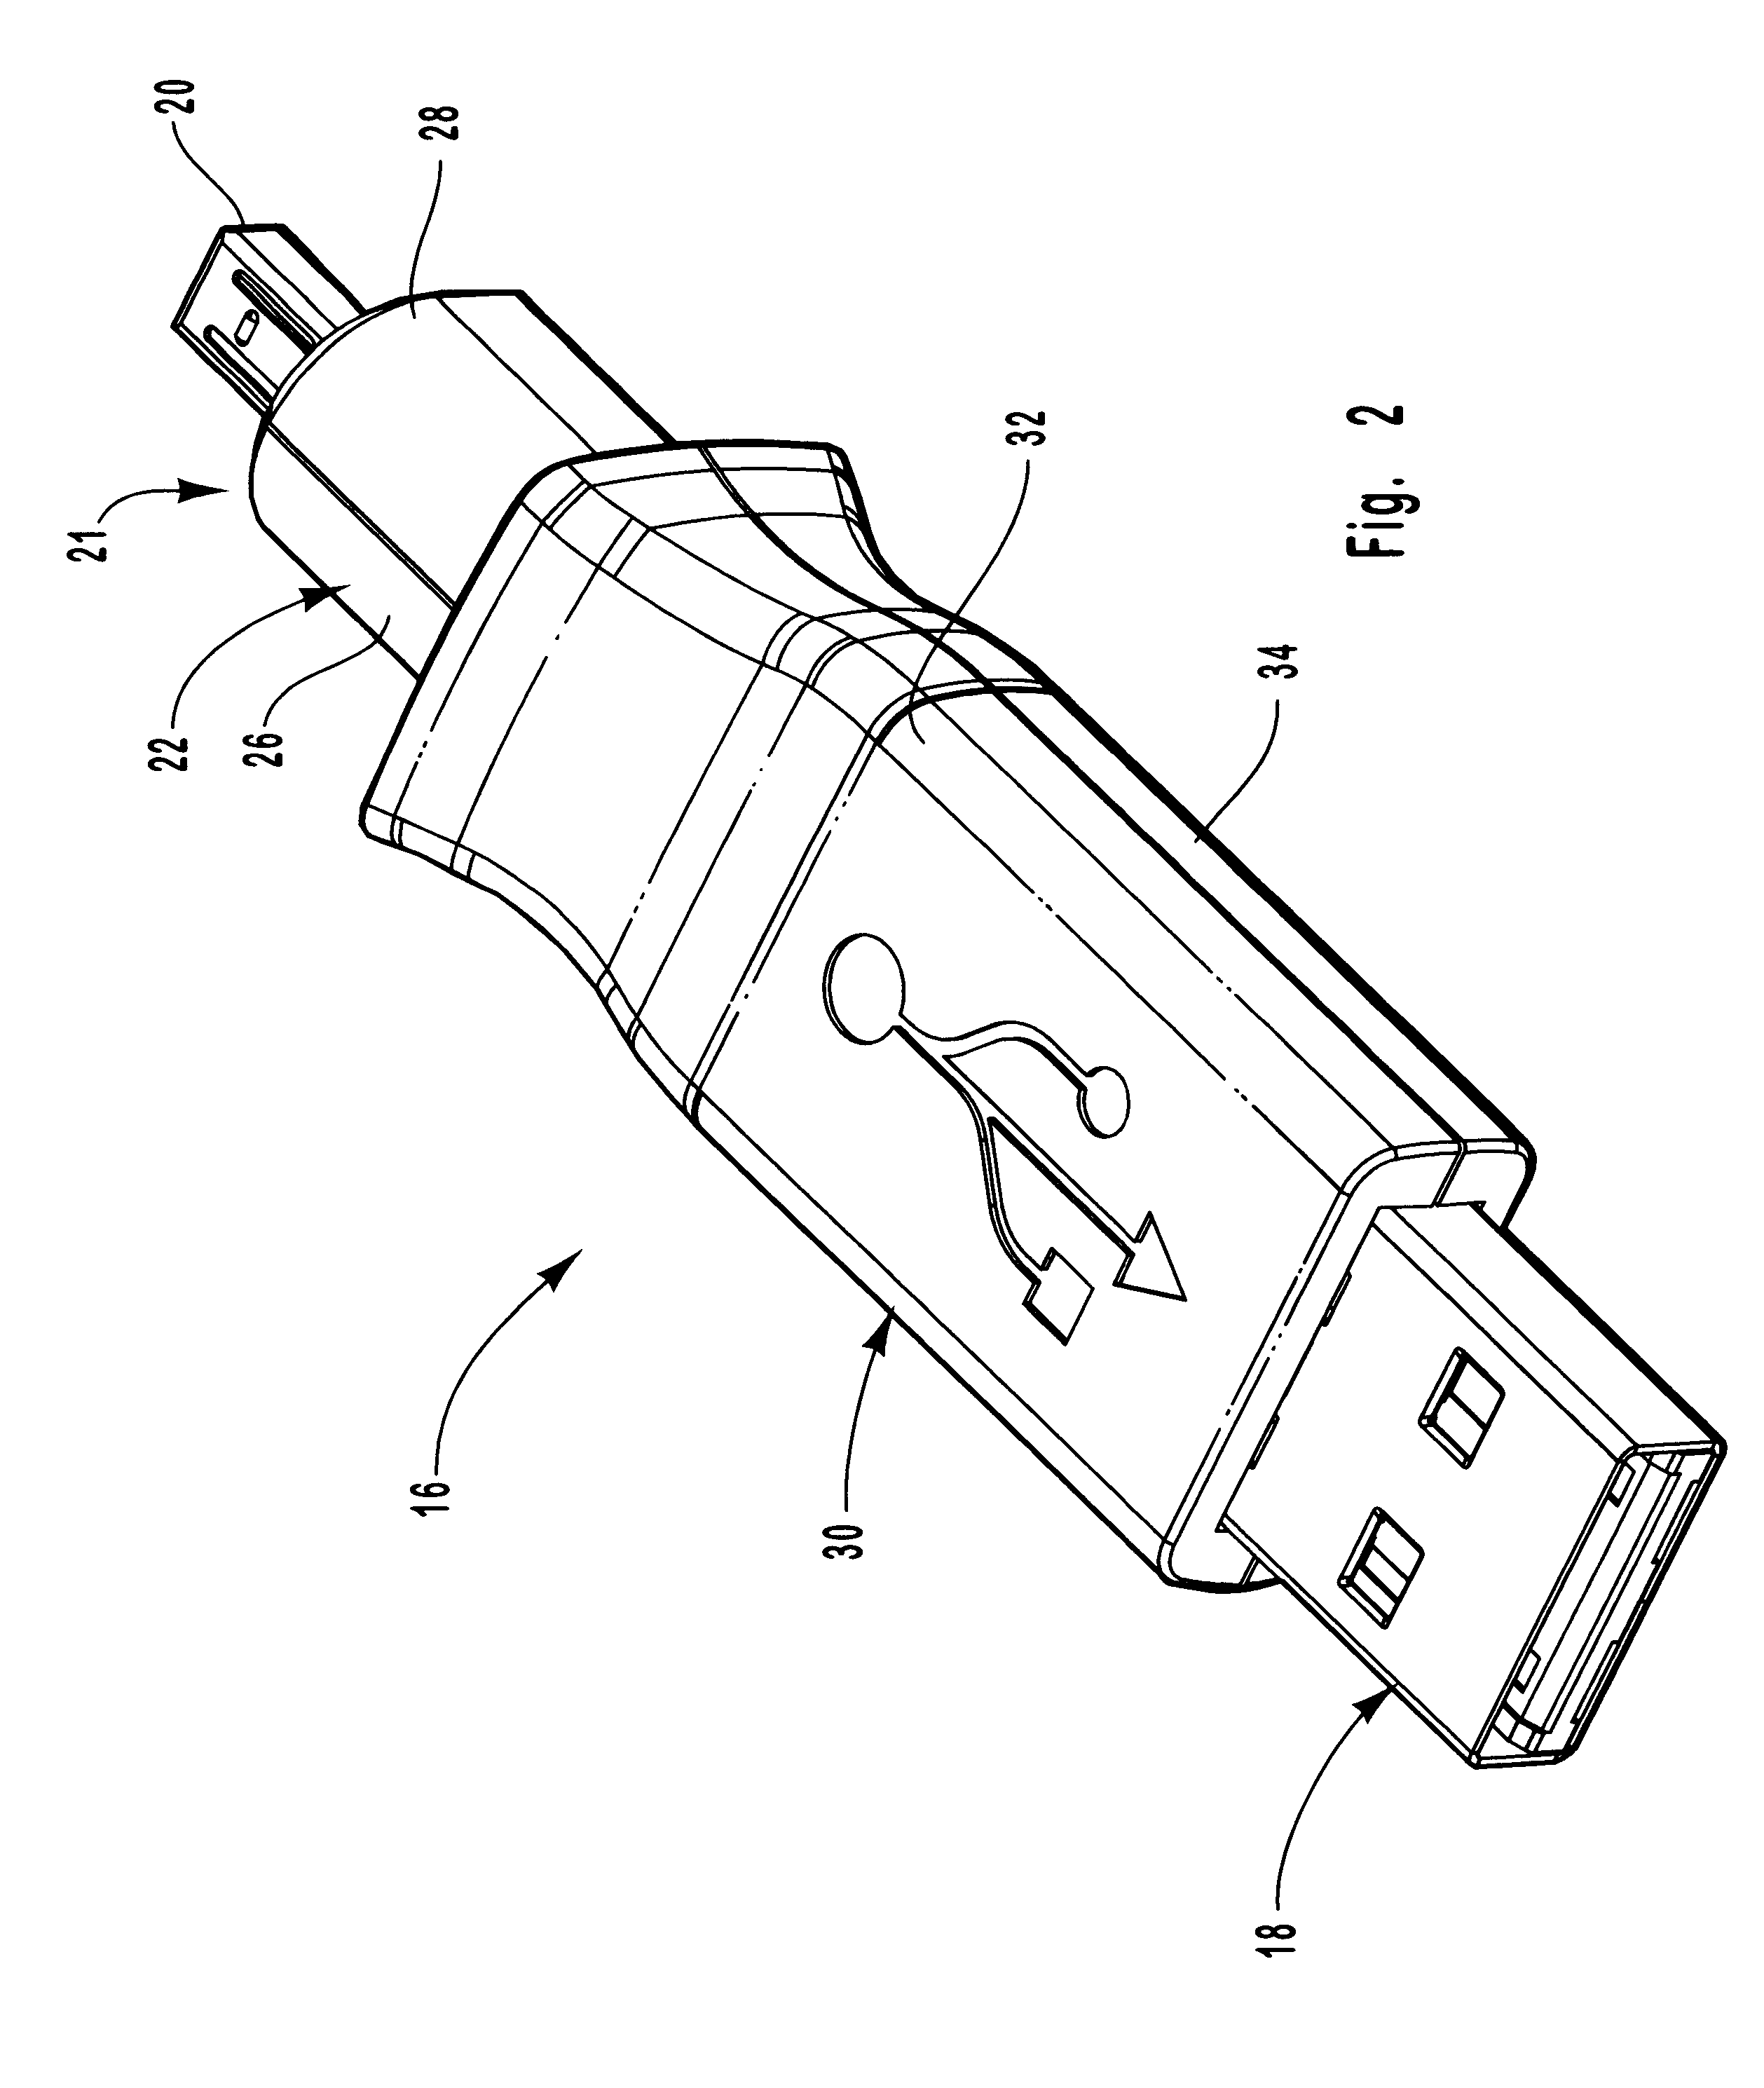 Rotating connector adaptor